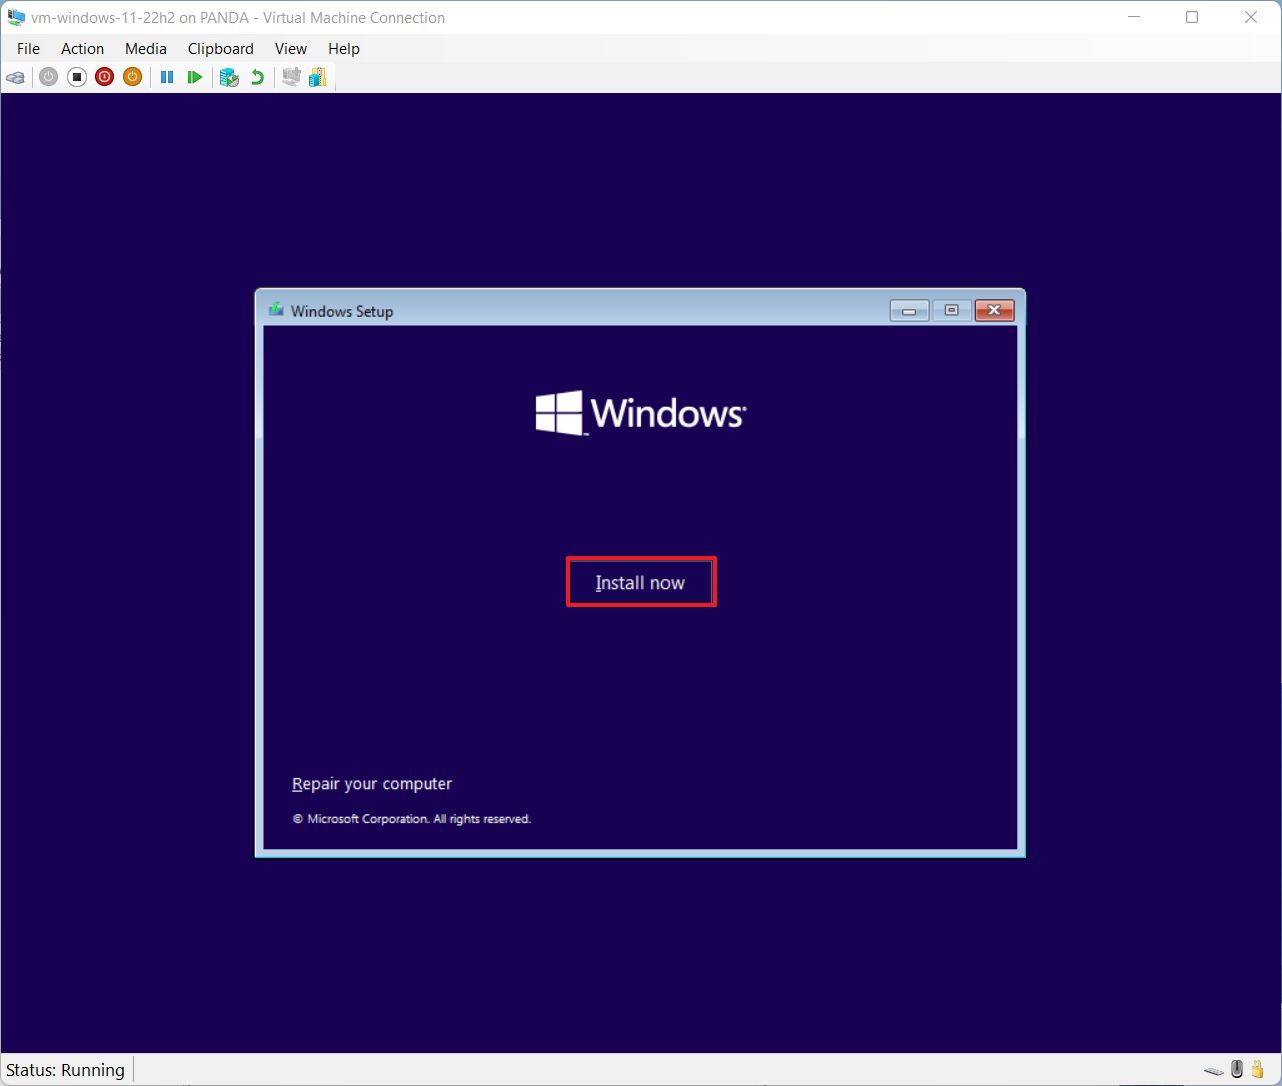 Install Windows 11 now